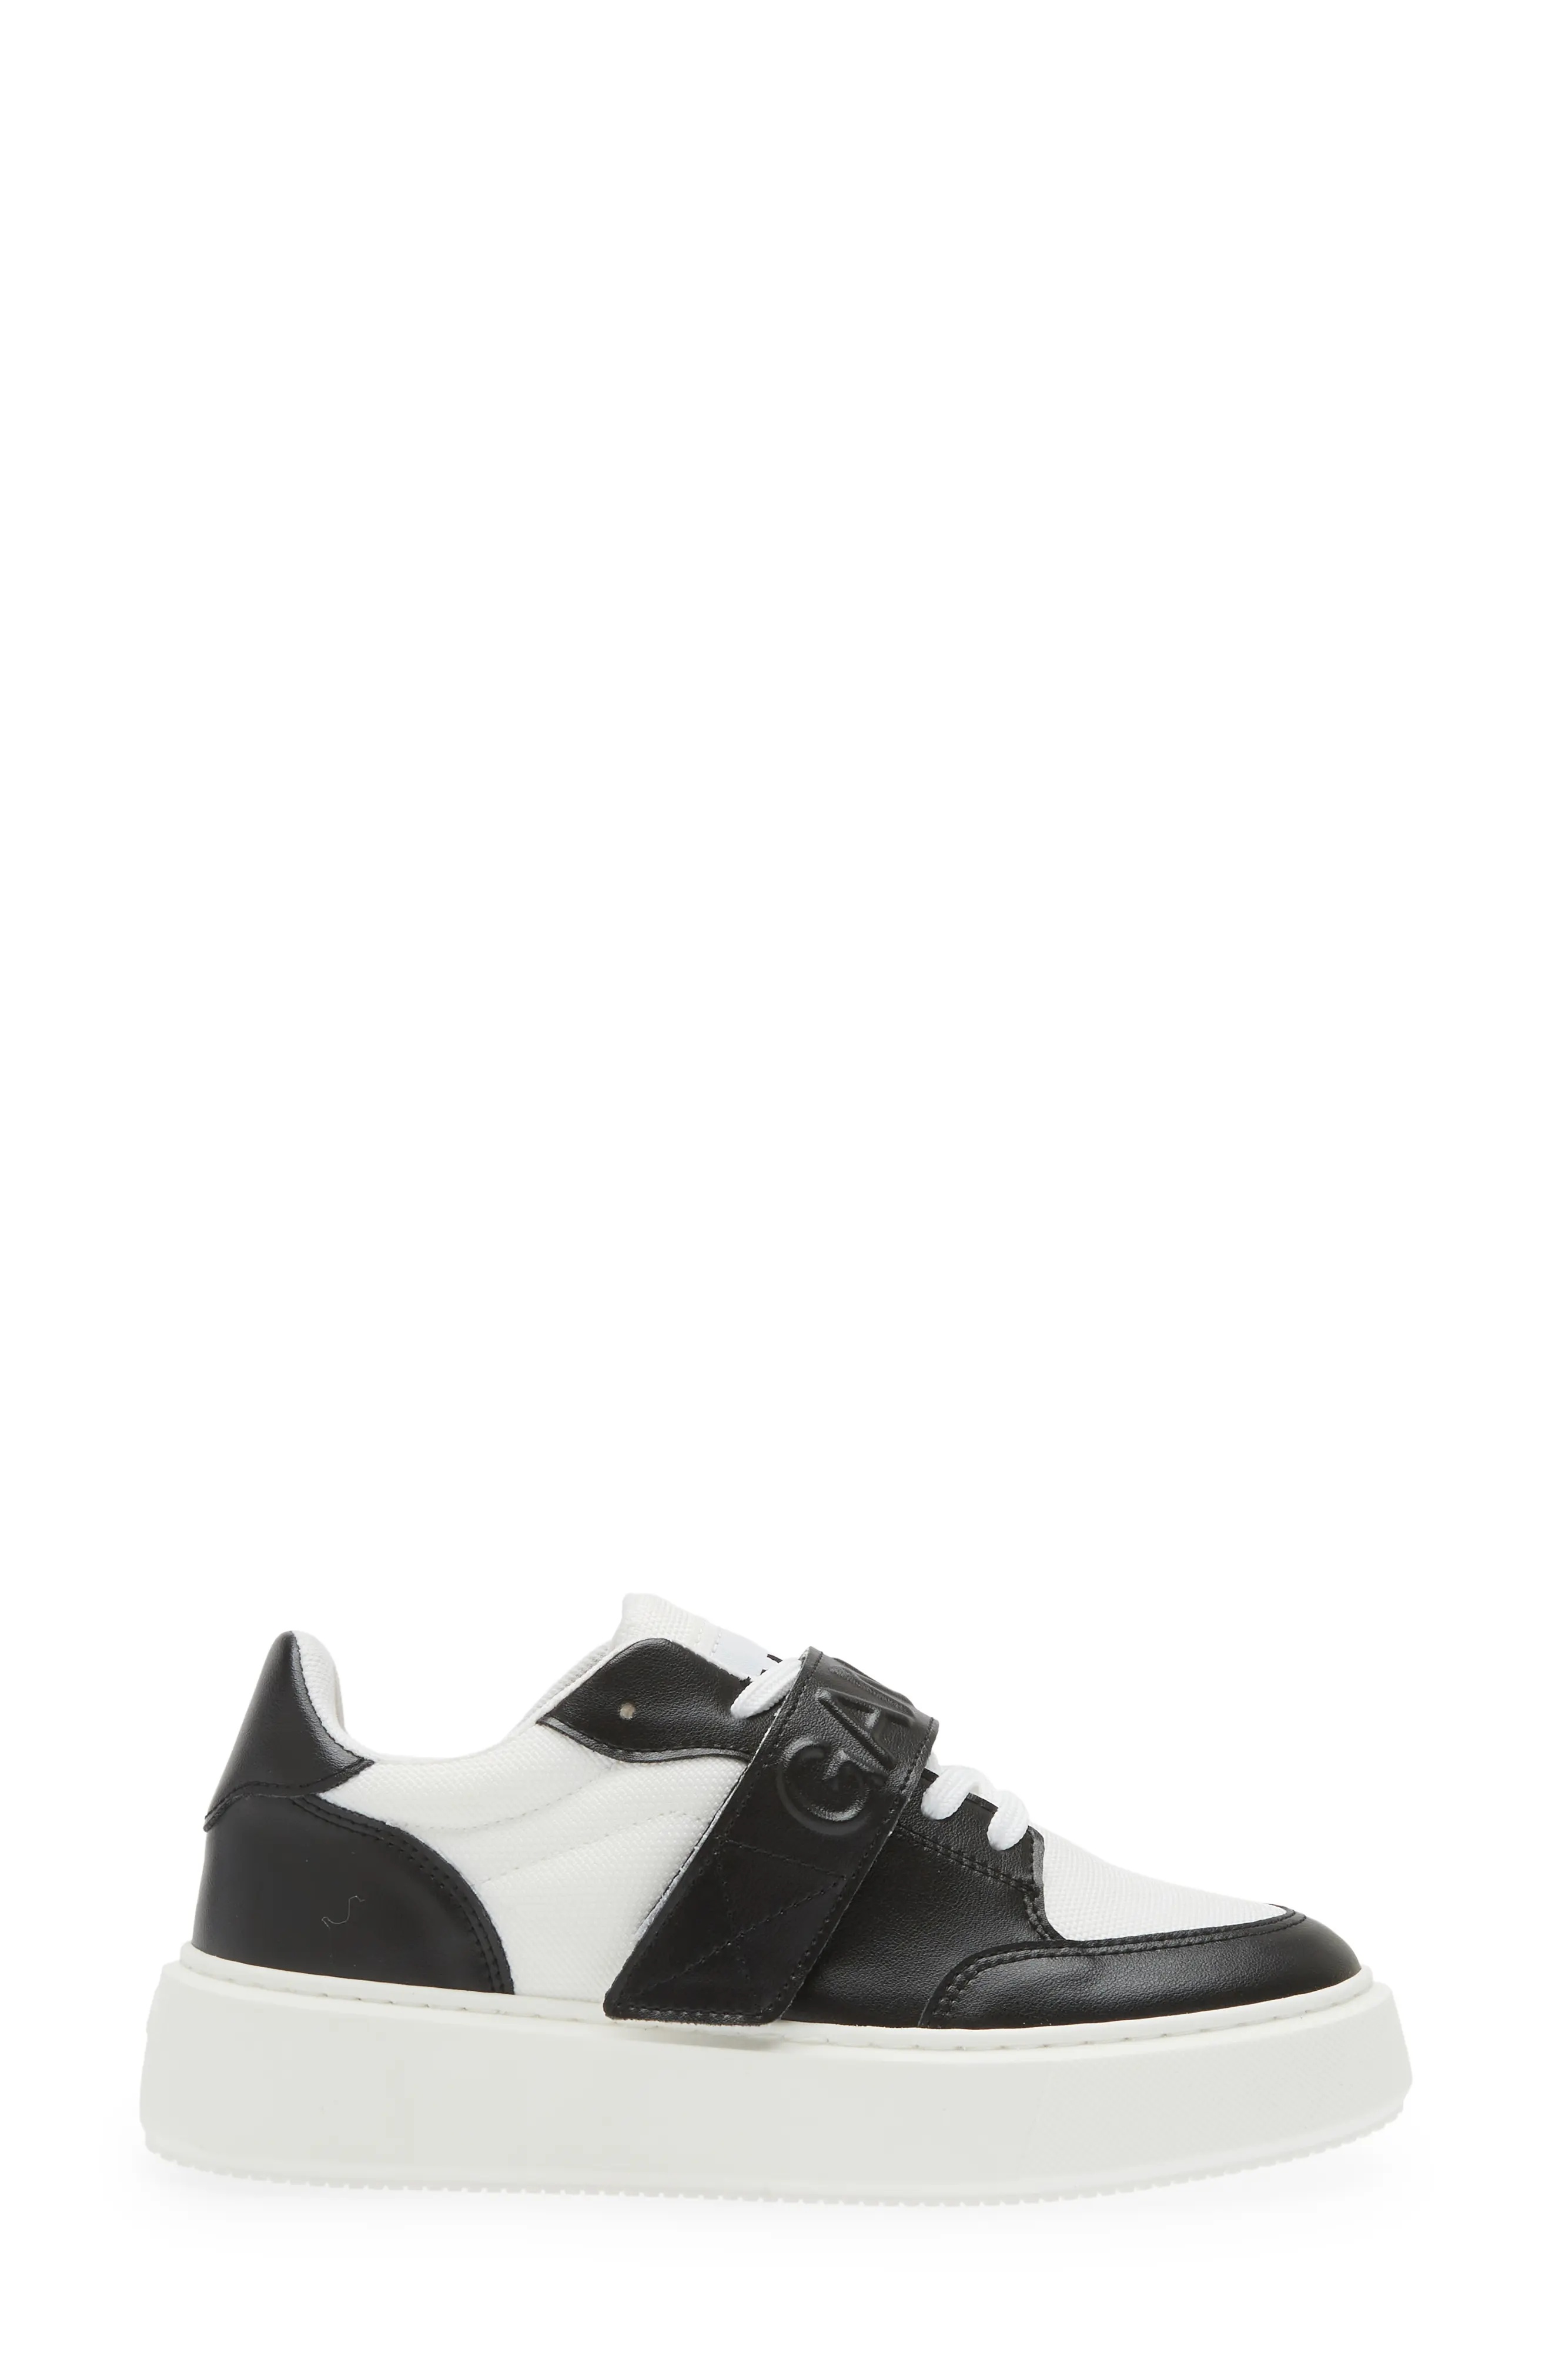 Mixed Media Low Top Sneaker in Black/White Vintage - 3